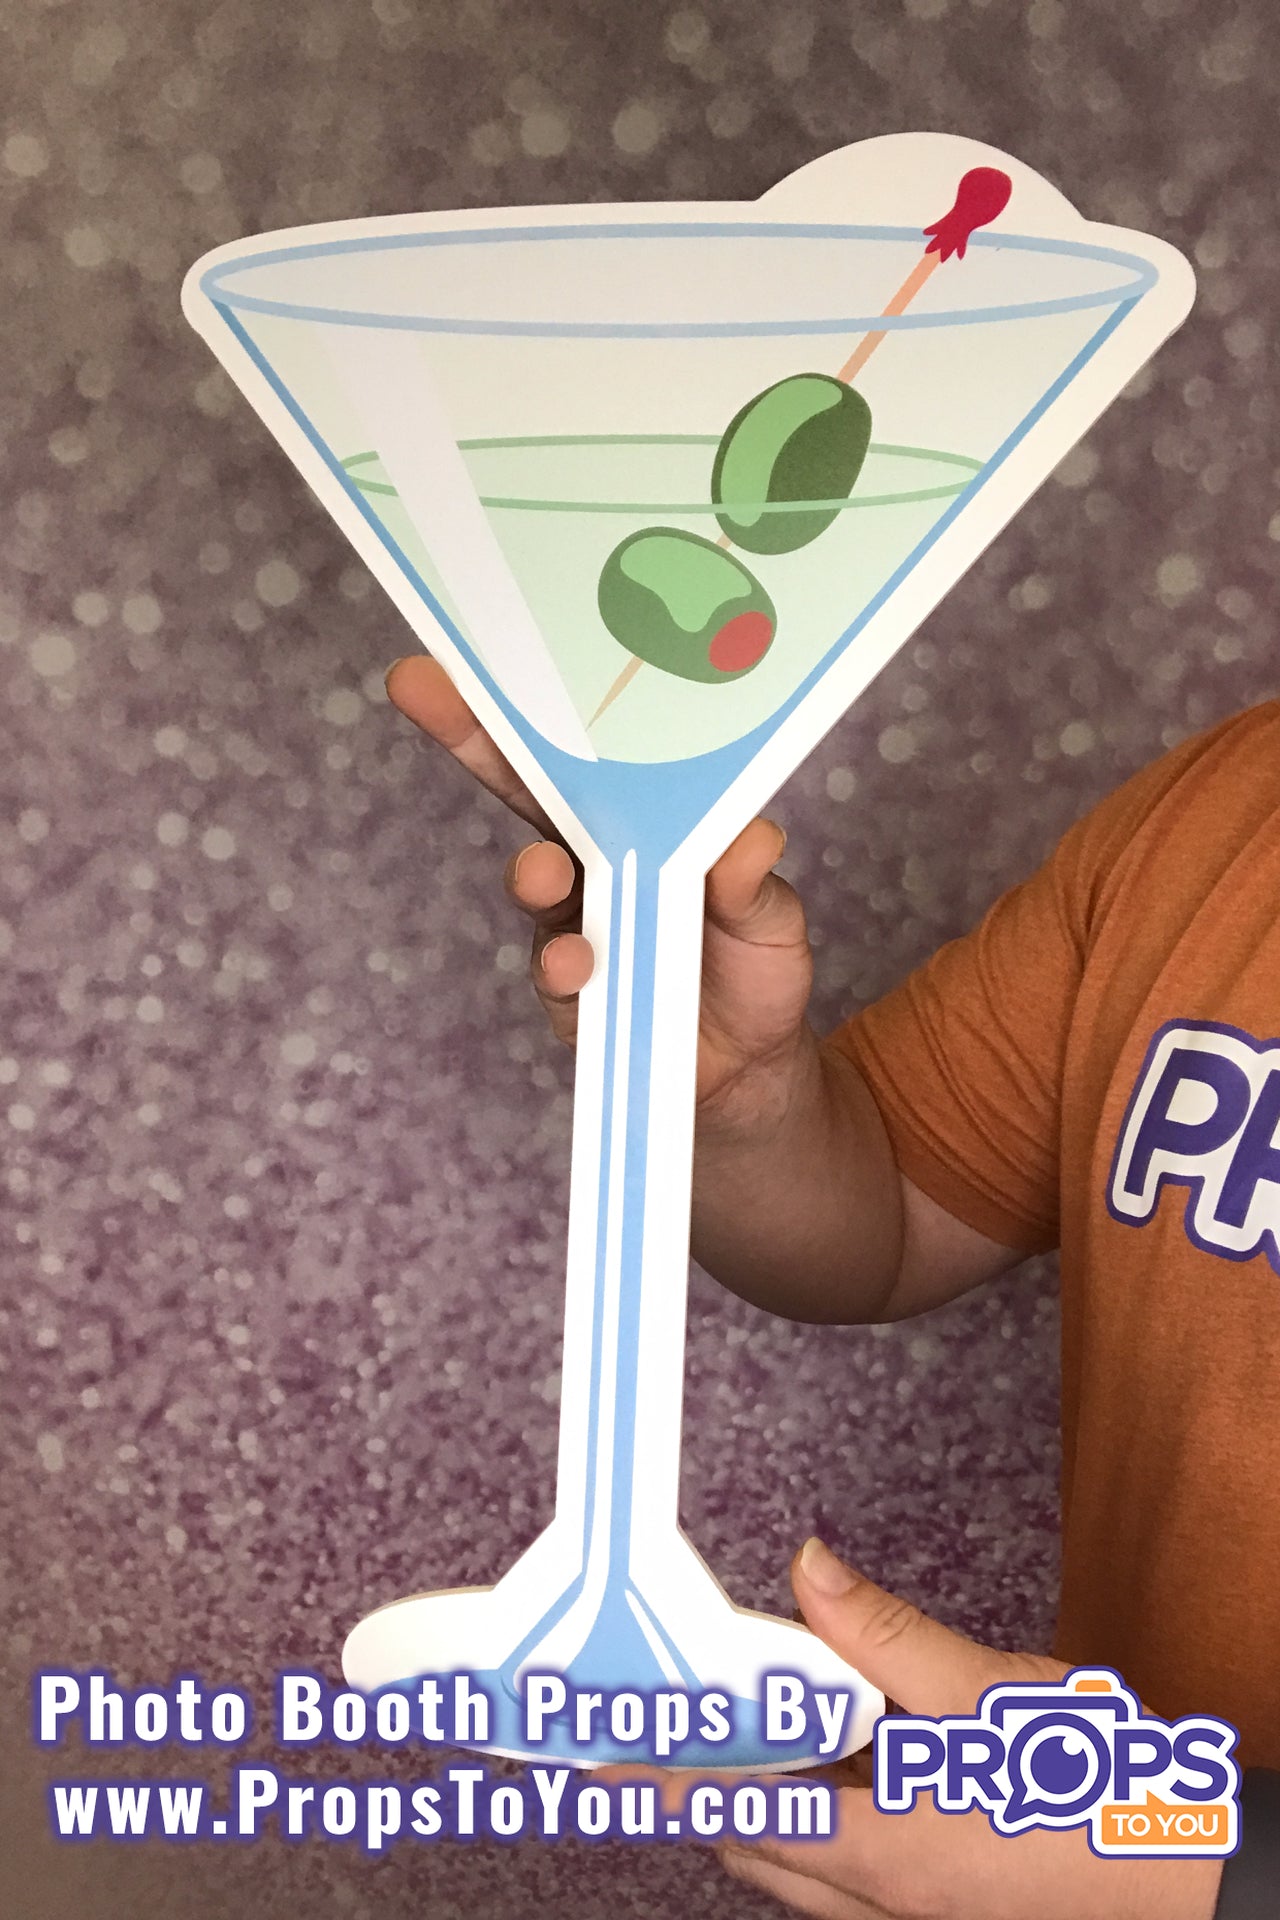 BIG Props: Cocktails! Martini/Cosmopolitan Photo Booth Prop